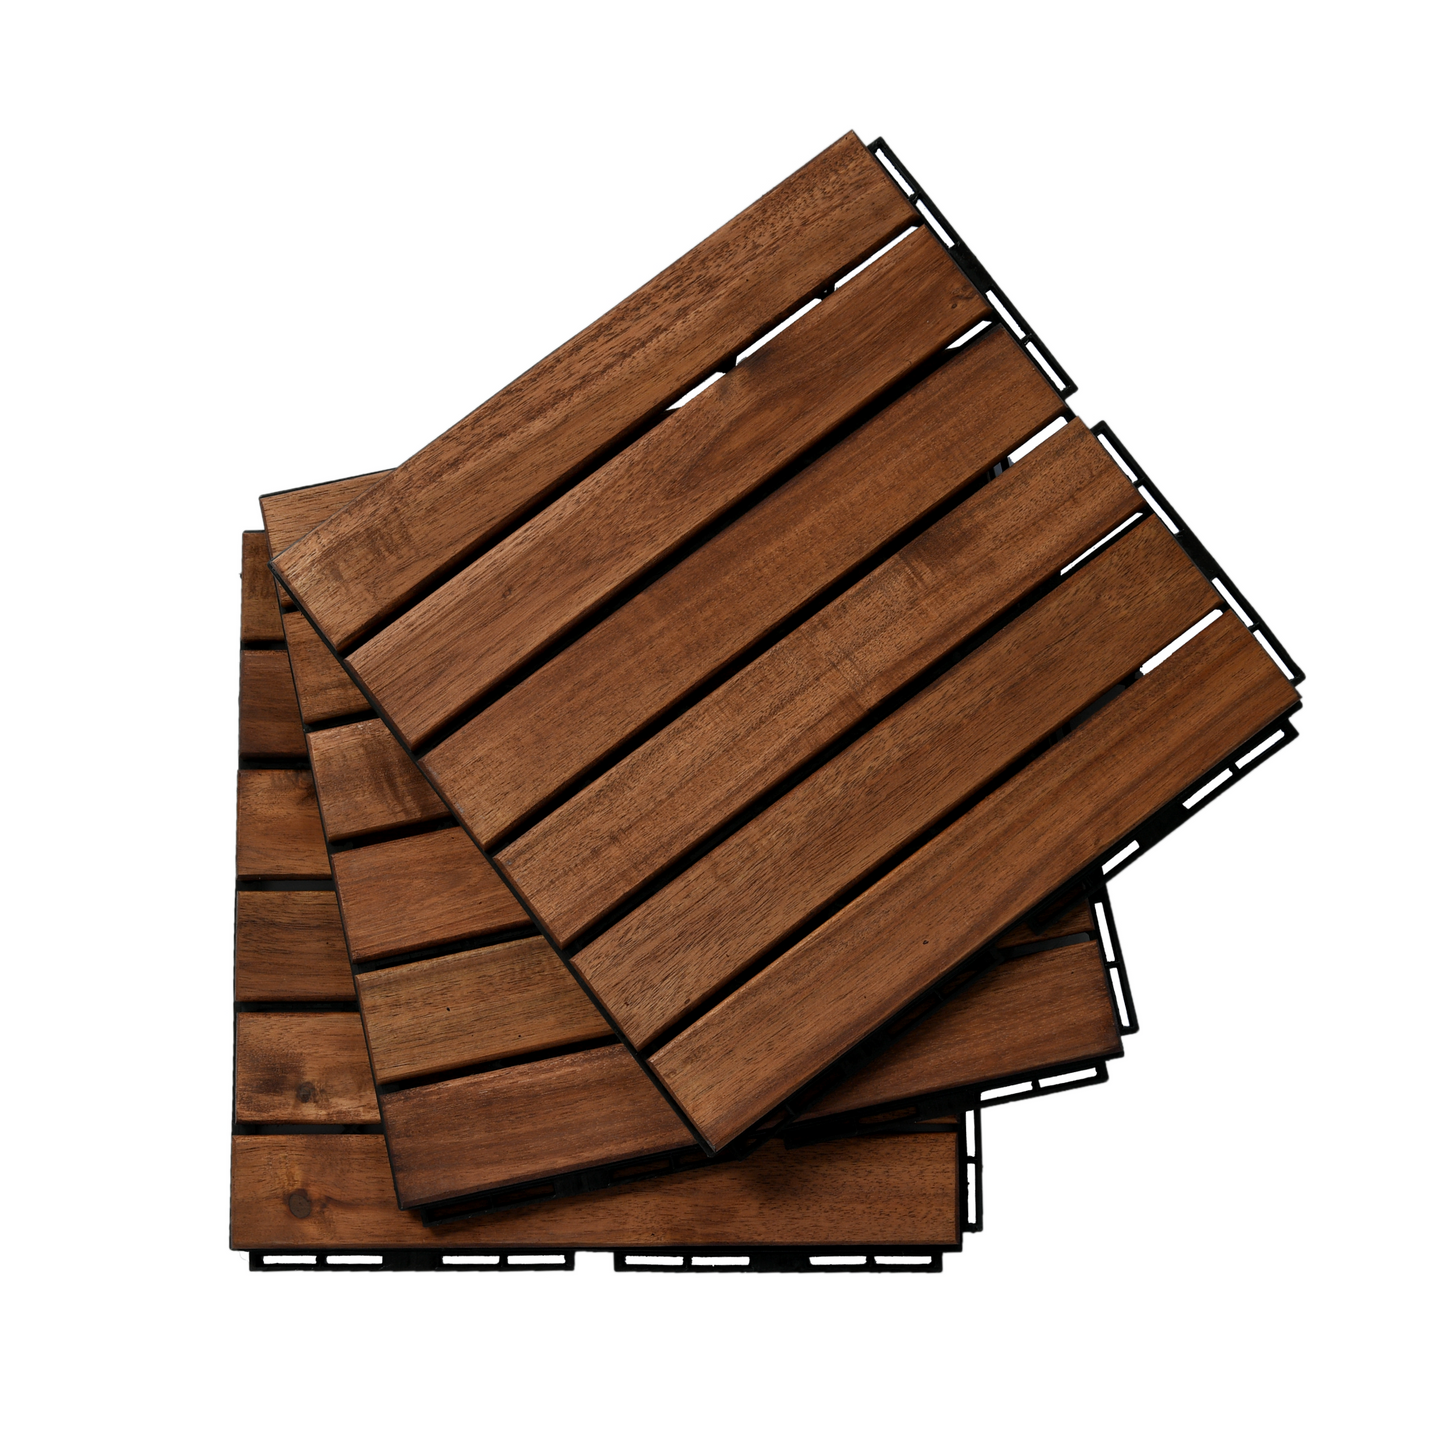 12" x 12" Square Acacia Wood Interlocking Flooring Tiles Striped Pattern Pack of 10 Tiles